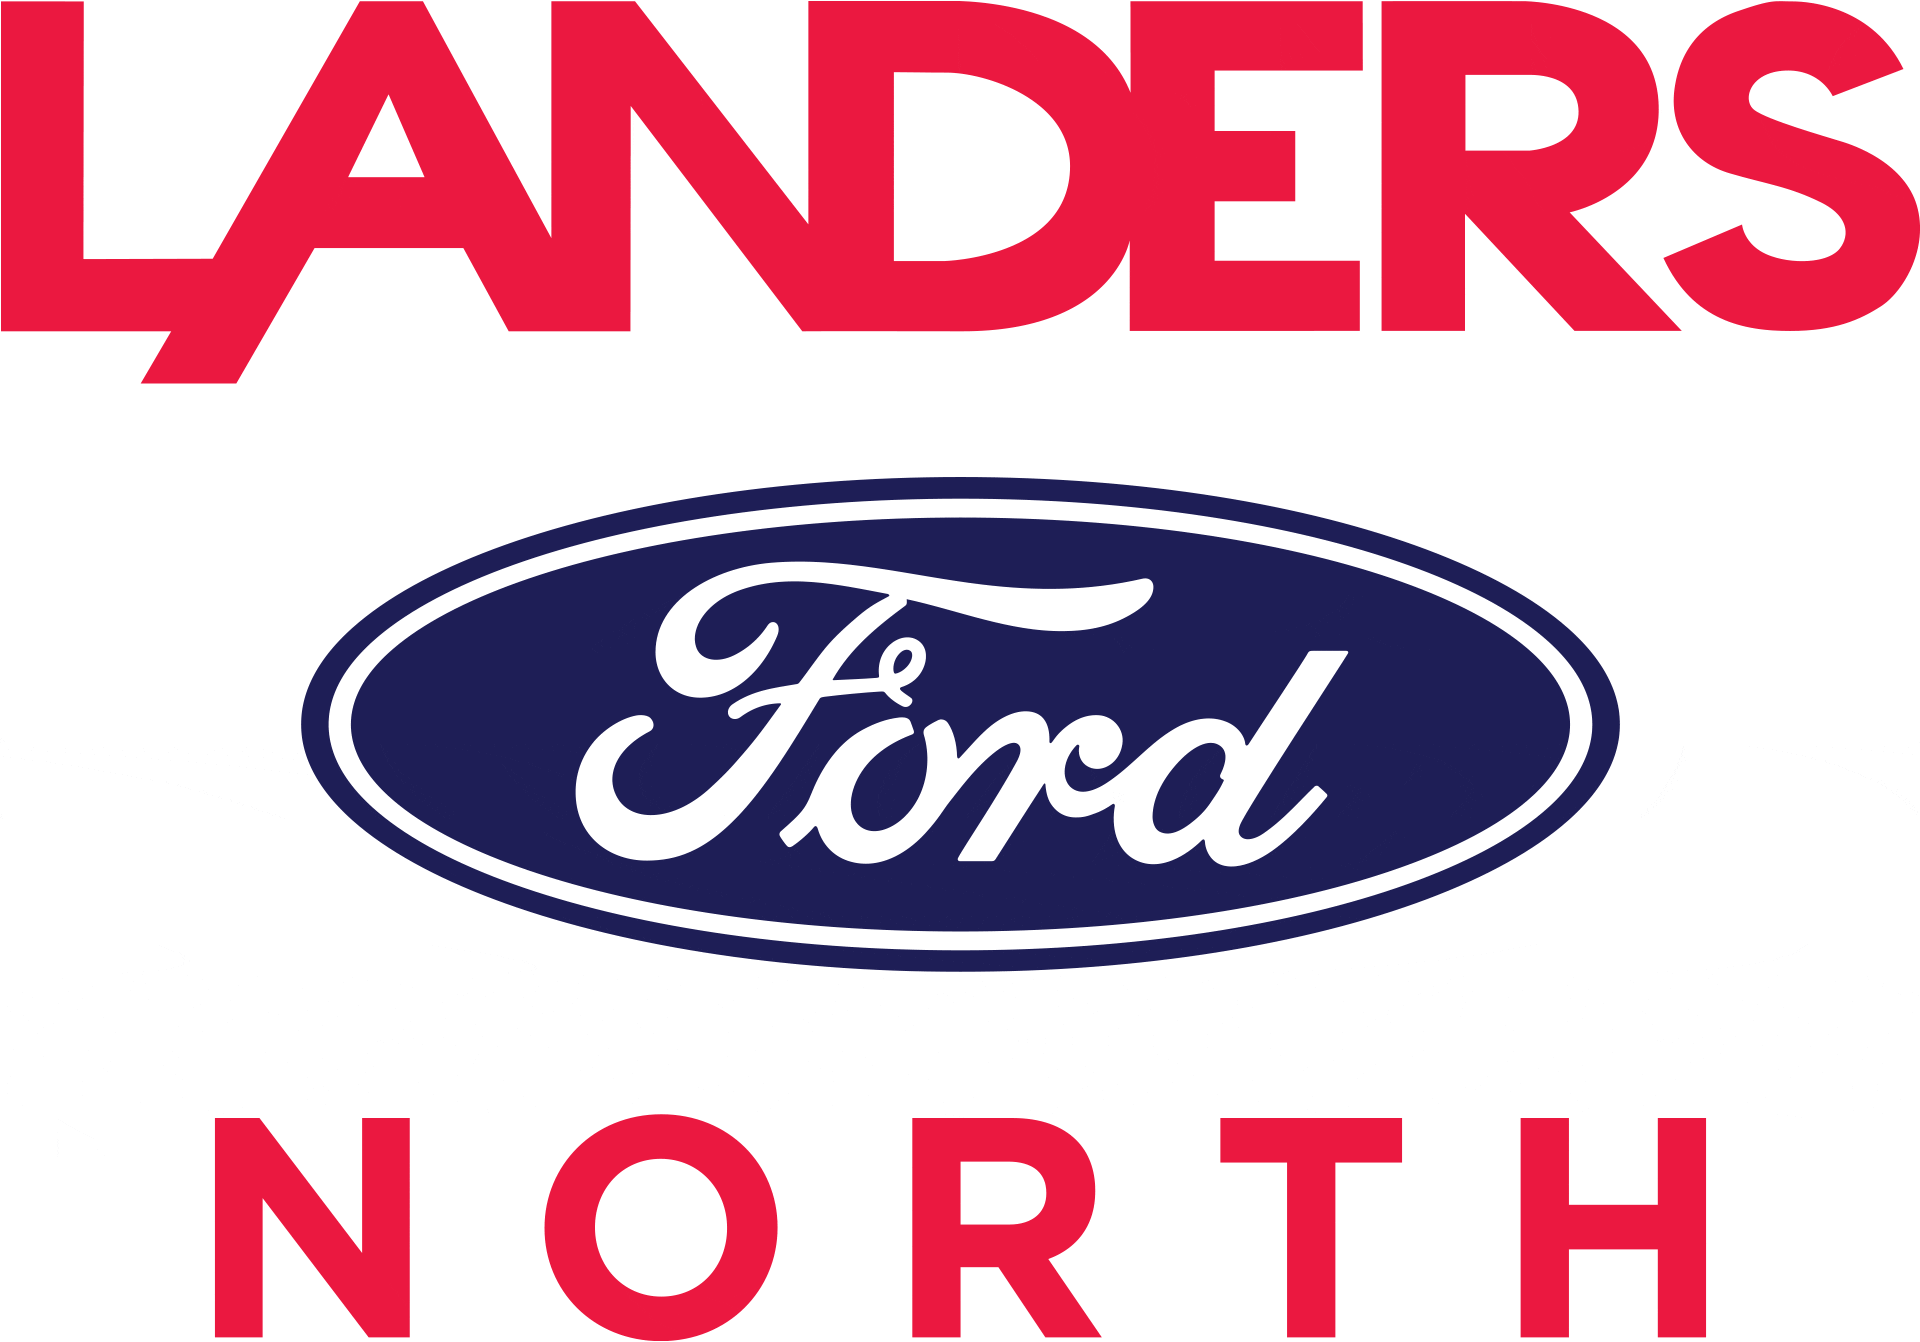 Landers Ford North